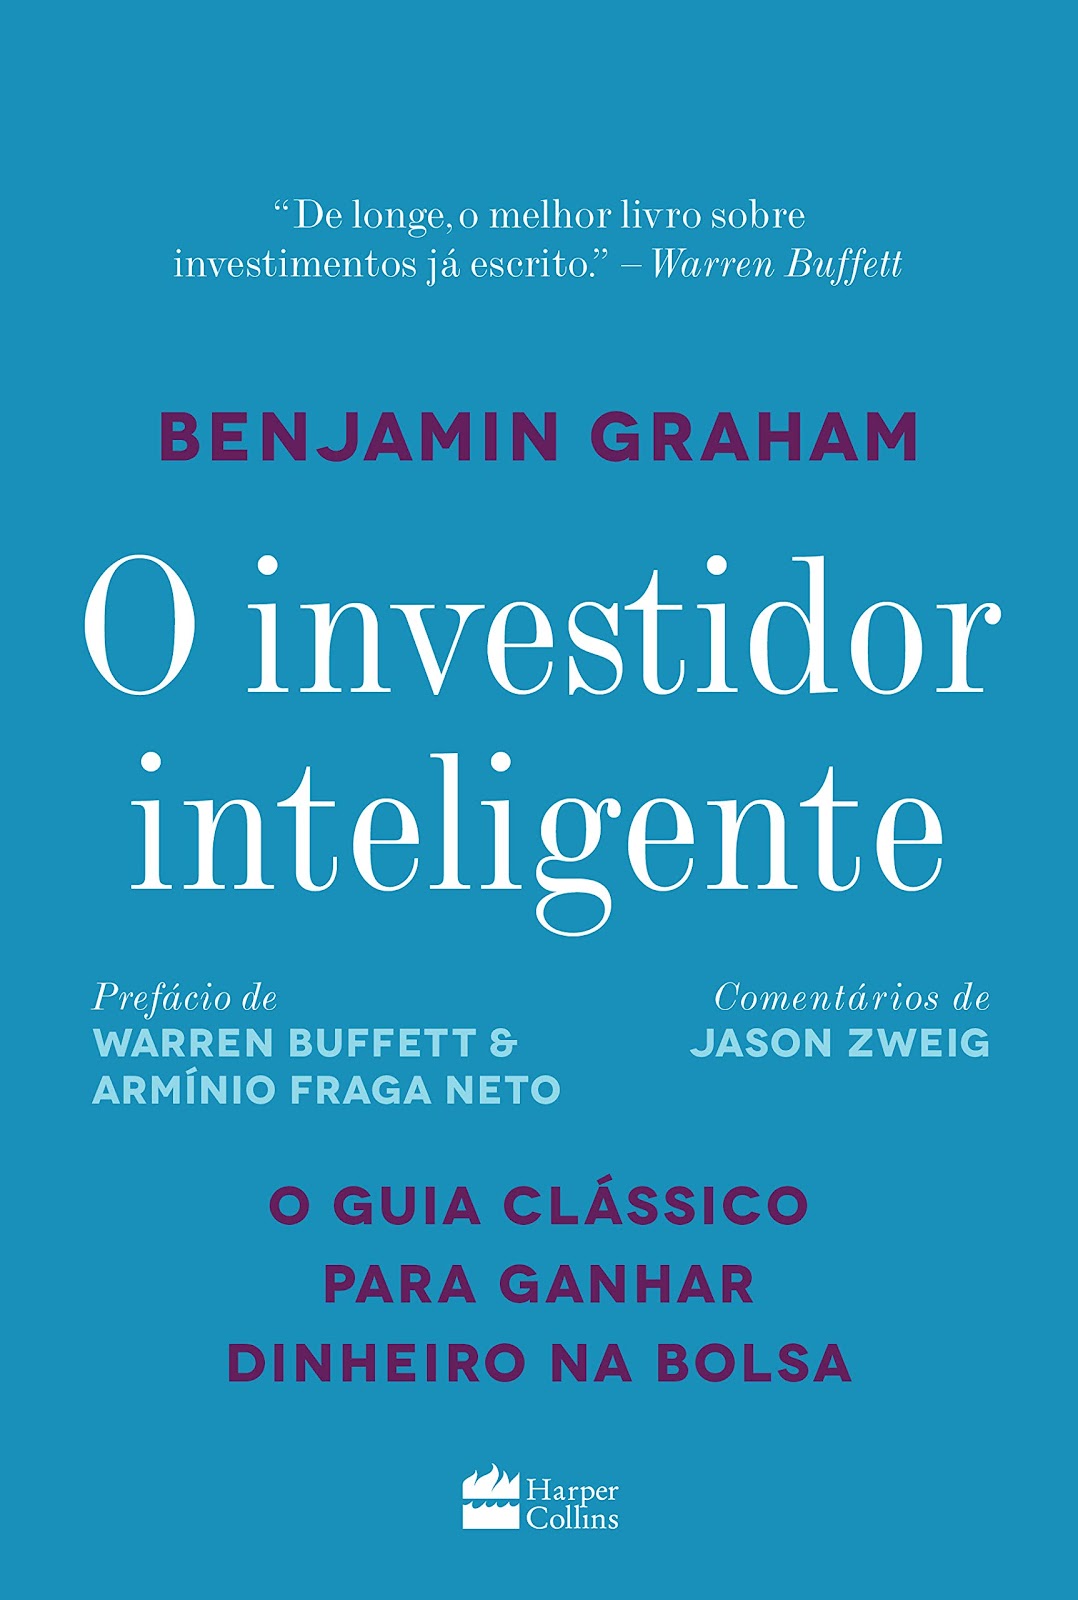 Livro O Investidor Inteligente - Benjamin Graham